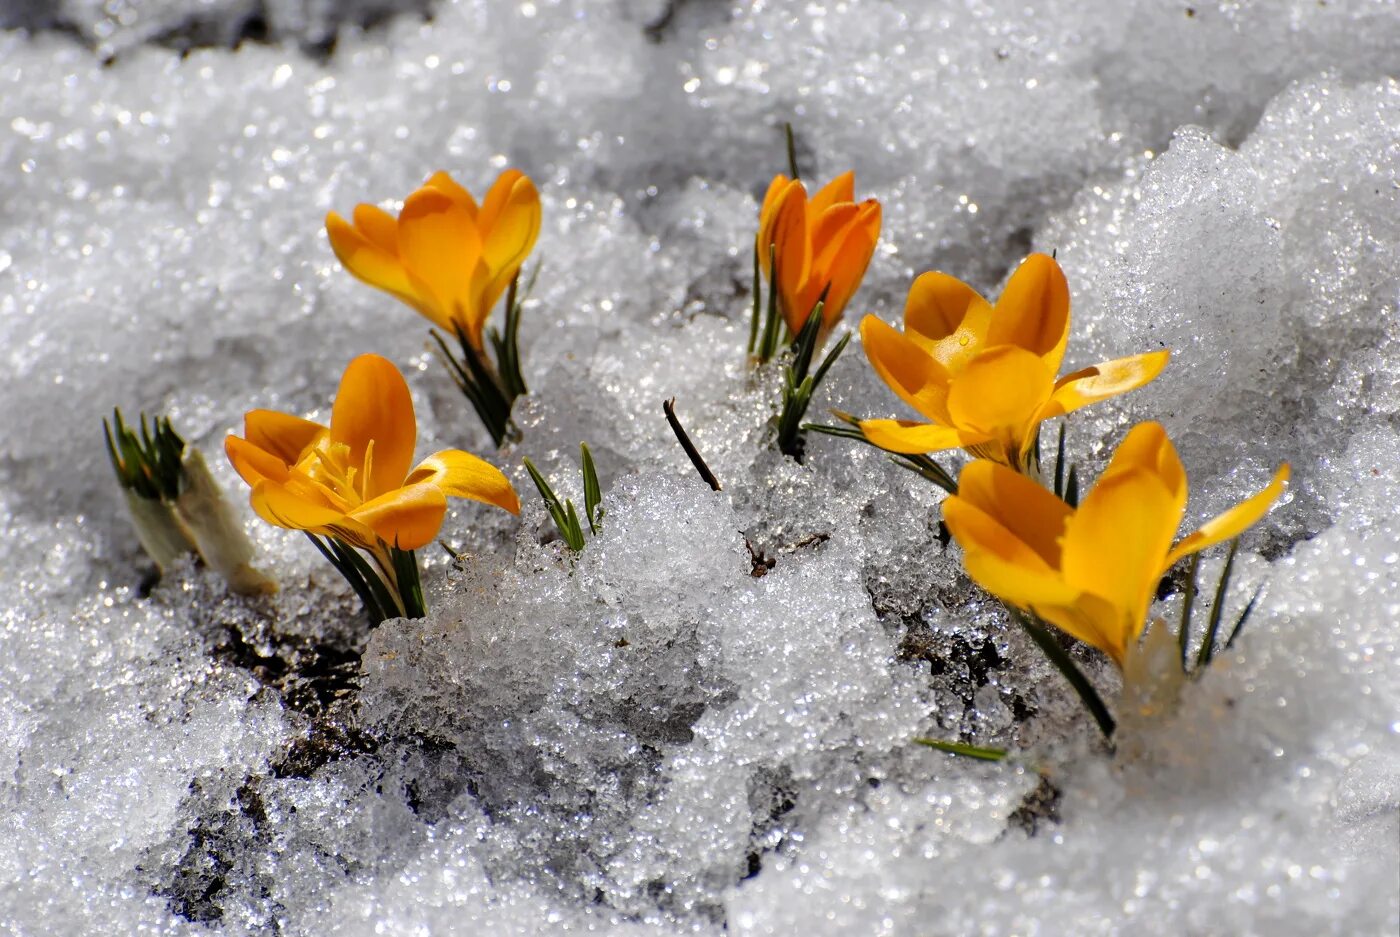 Где в марте снег. Мартовский снег. Цветы в снегу фото.